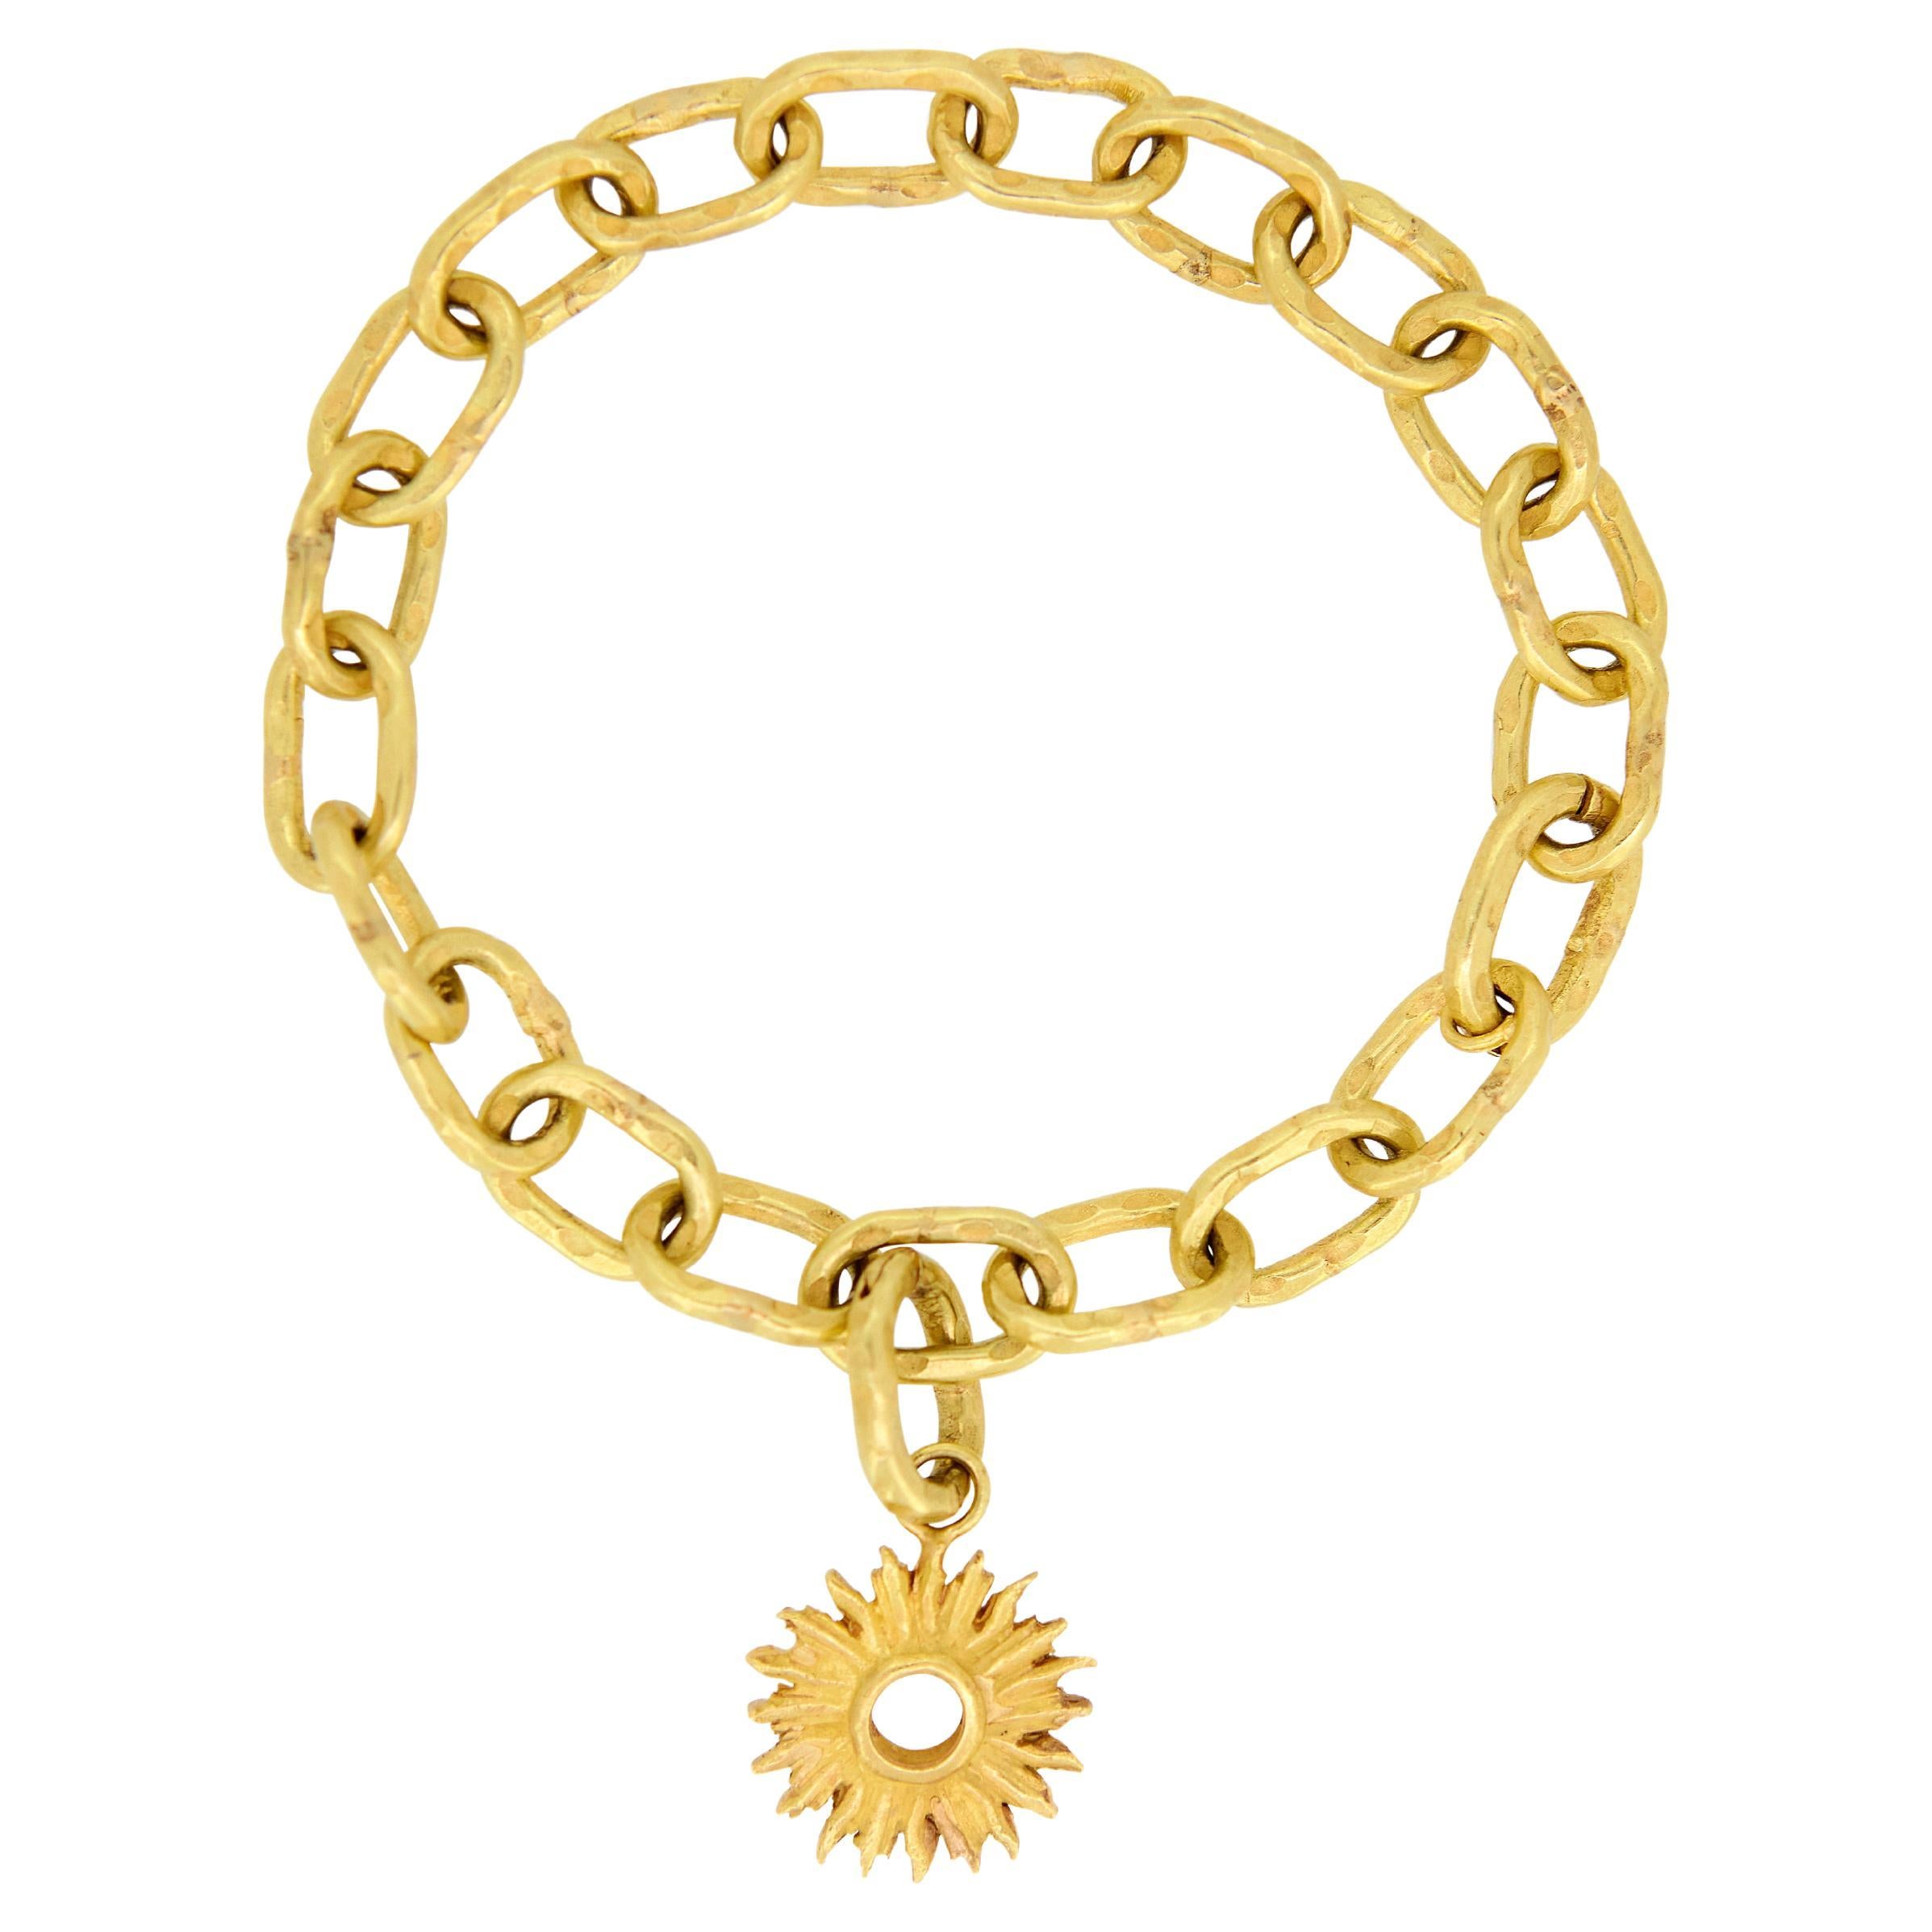 18kt Gold Link Charm Bracelet with a Sunburst Charm